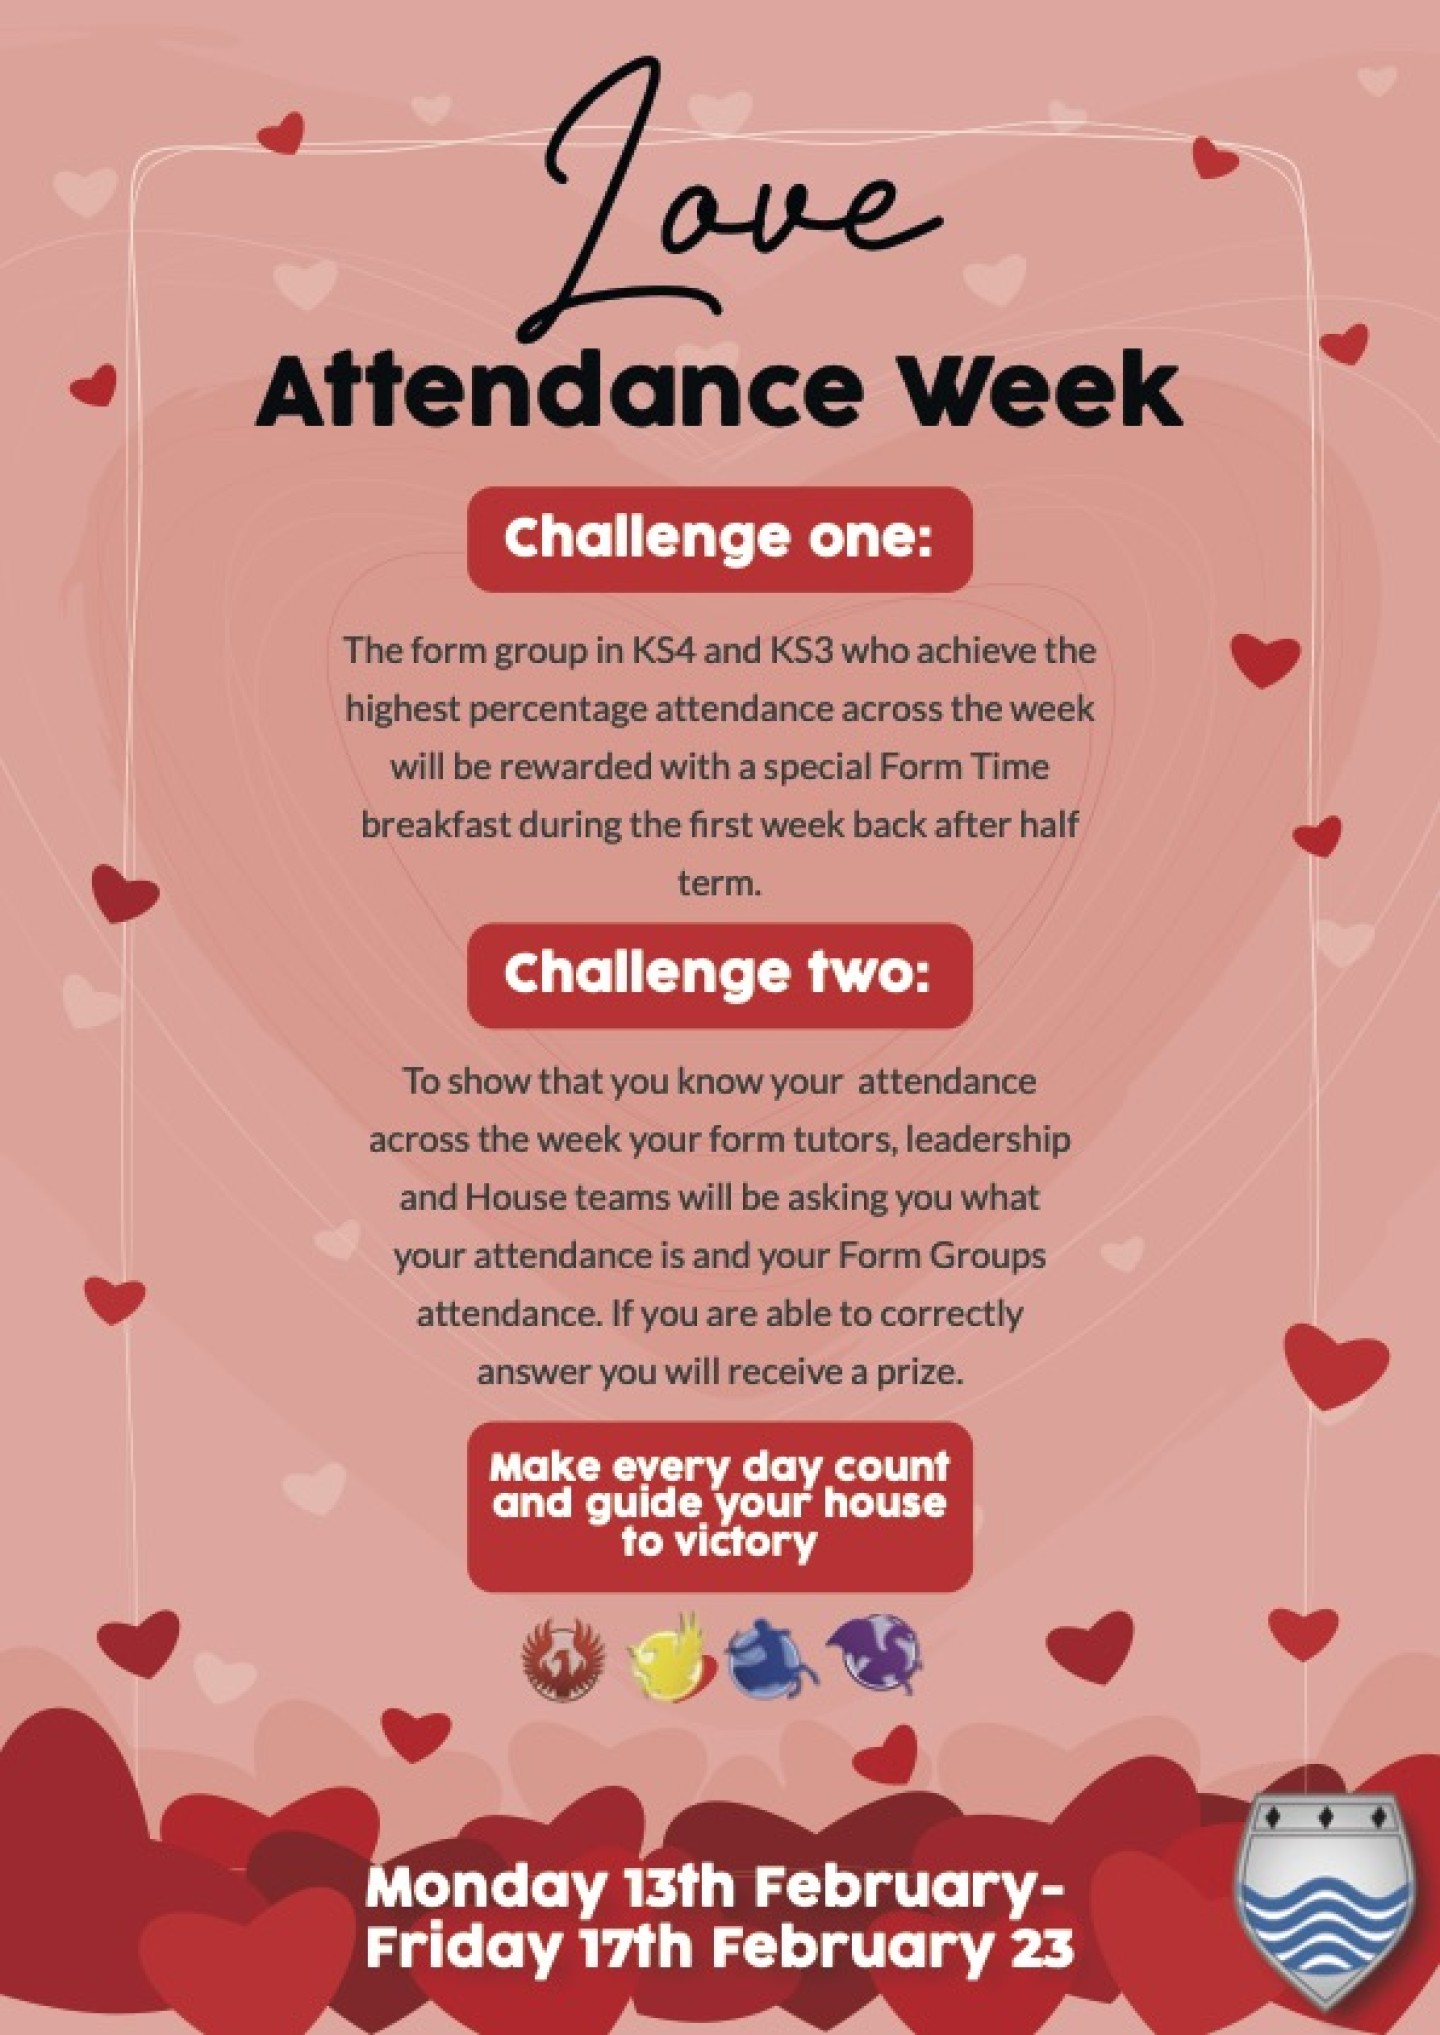 Love-attendance-week91